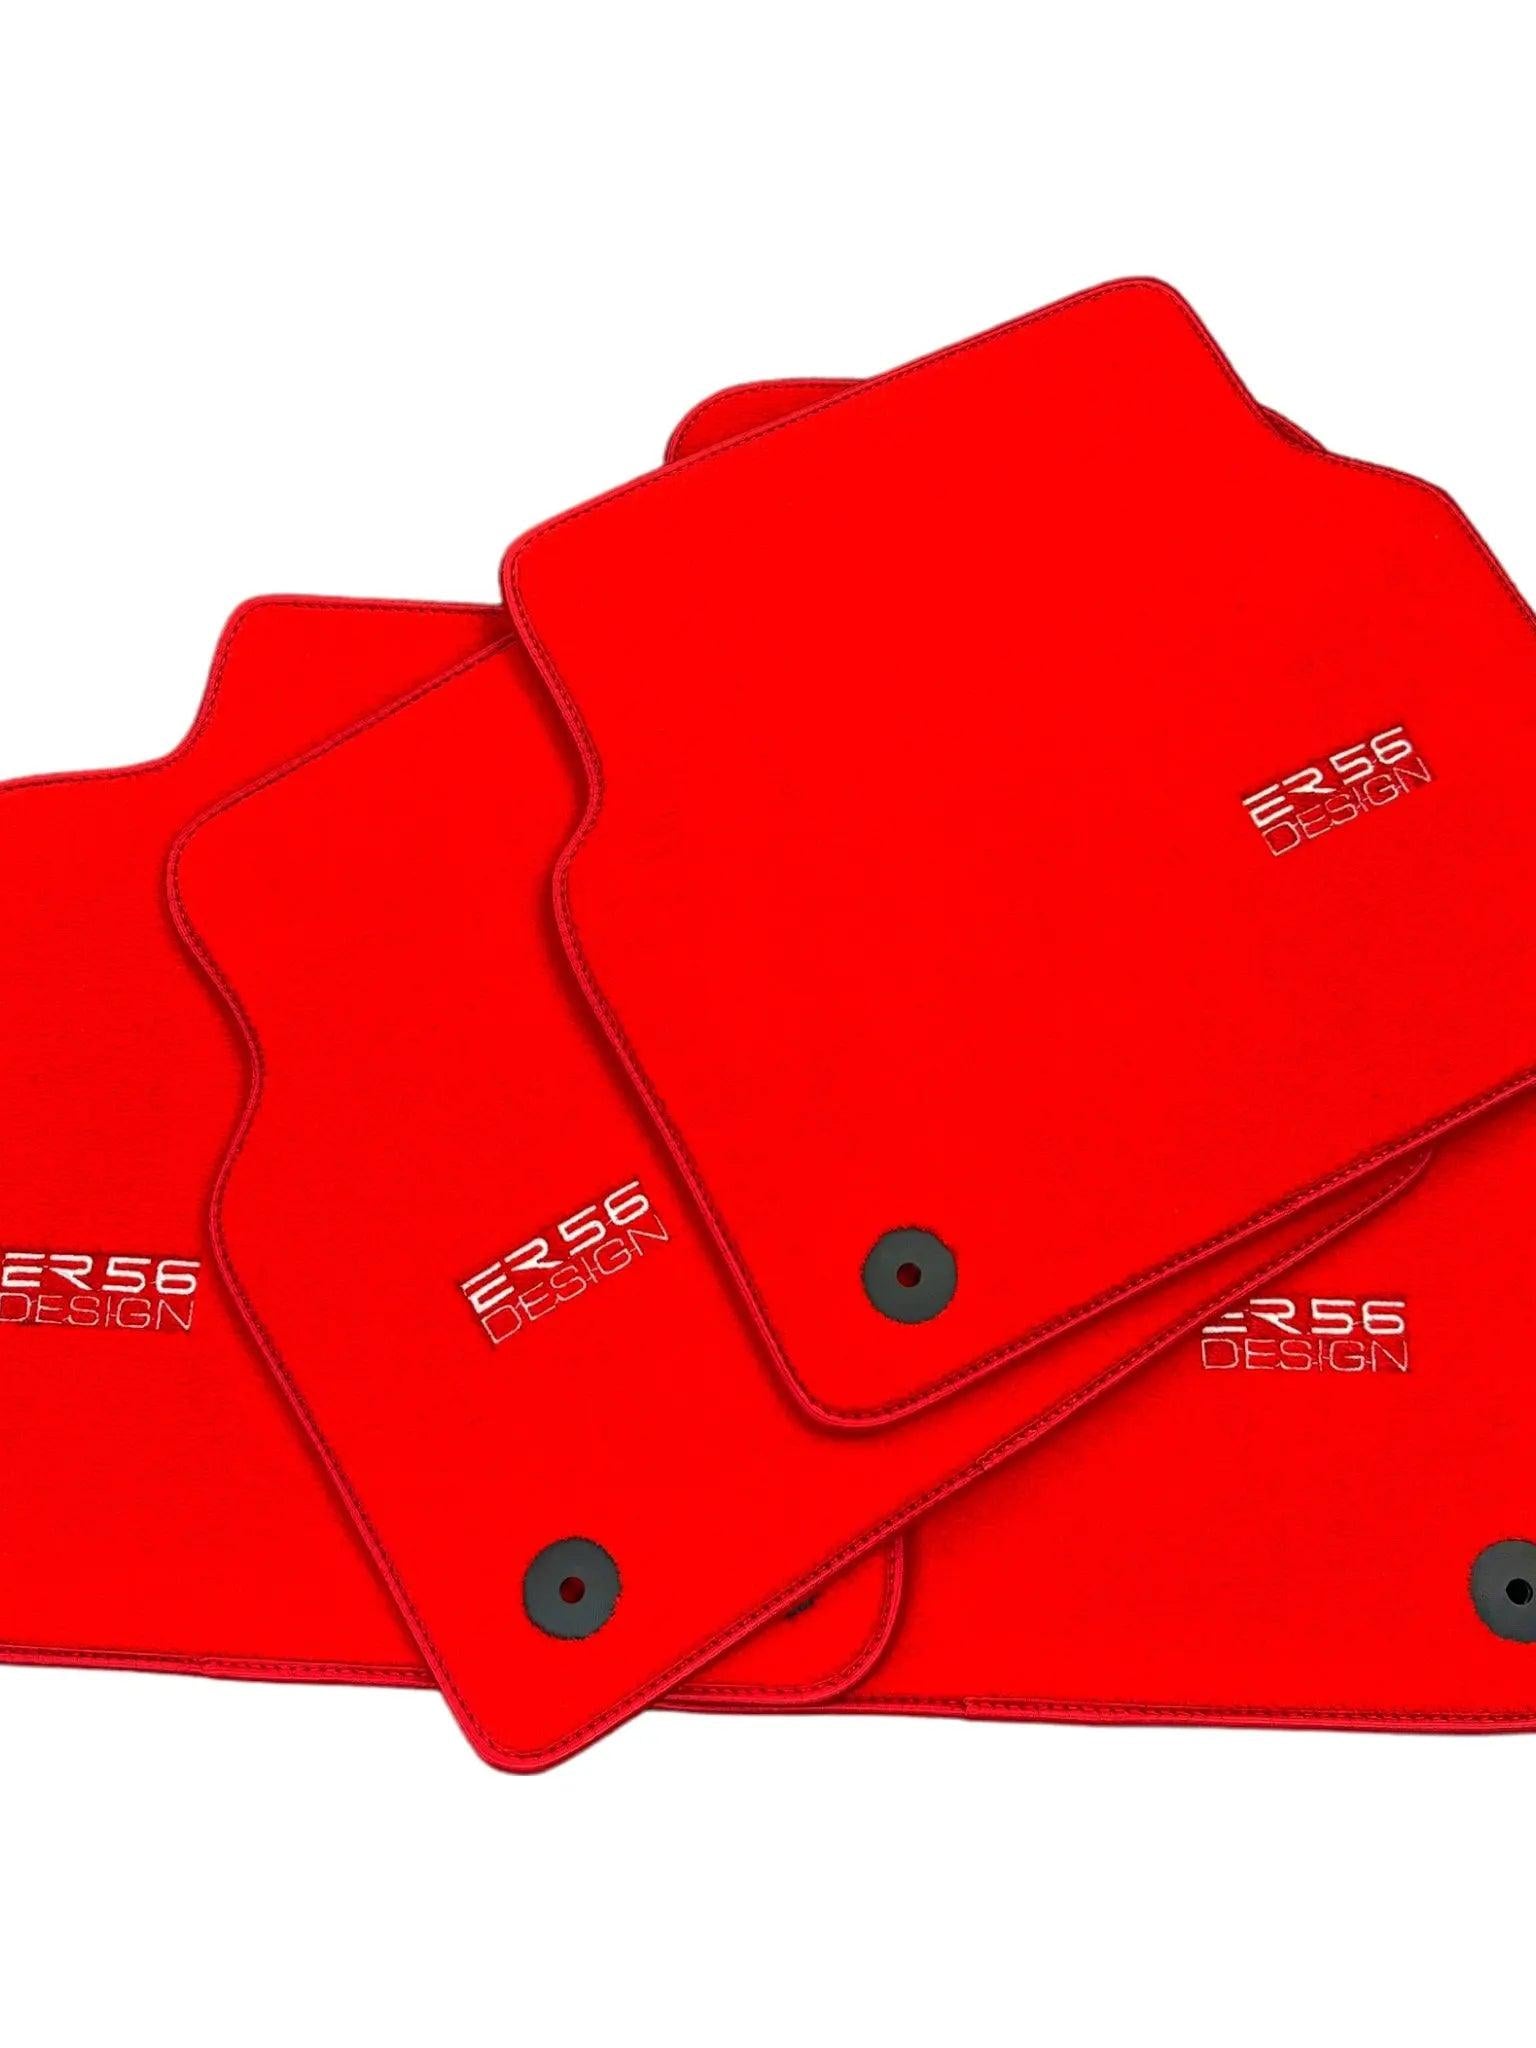 Red Floor Mats for Audi A6 - C7 Avant (2011-2018) | ER56 Design